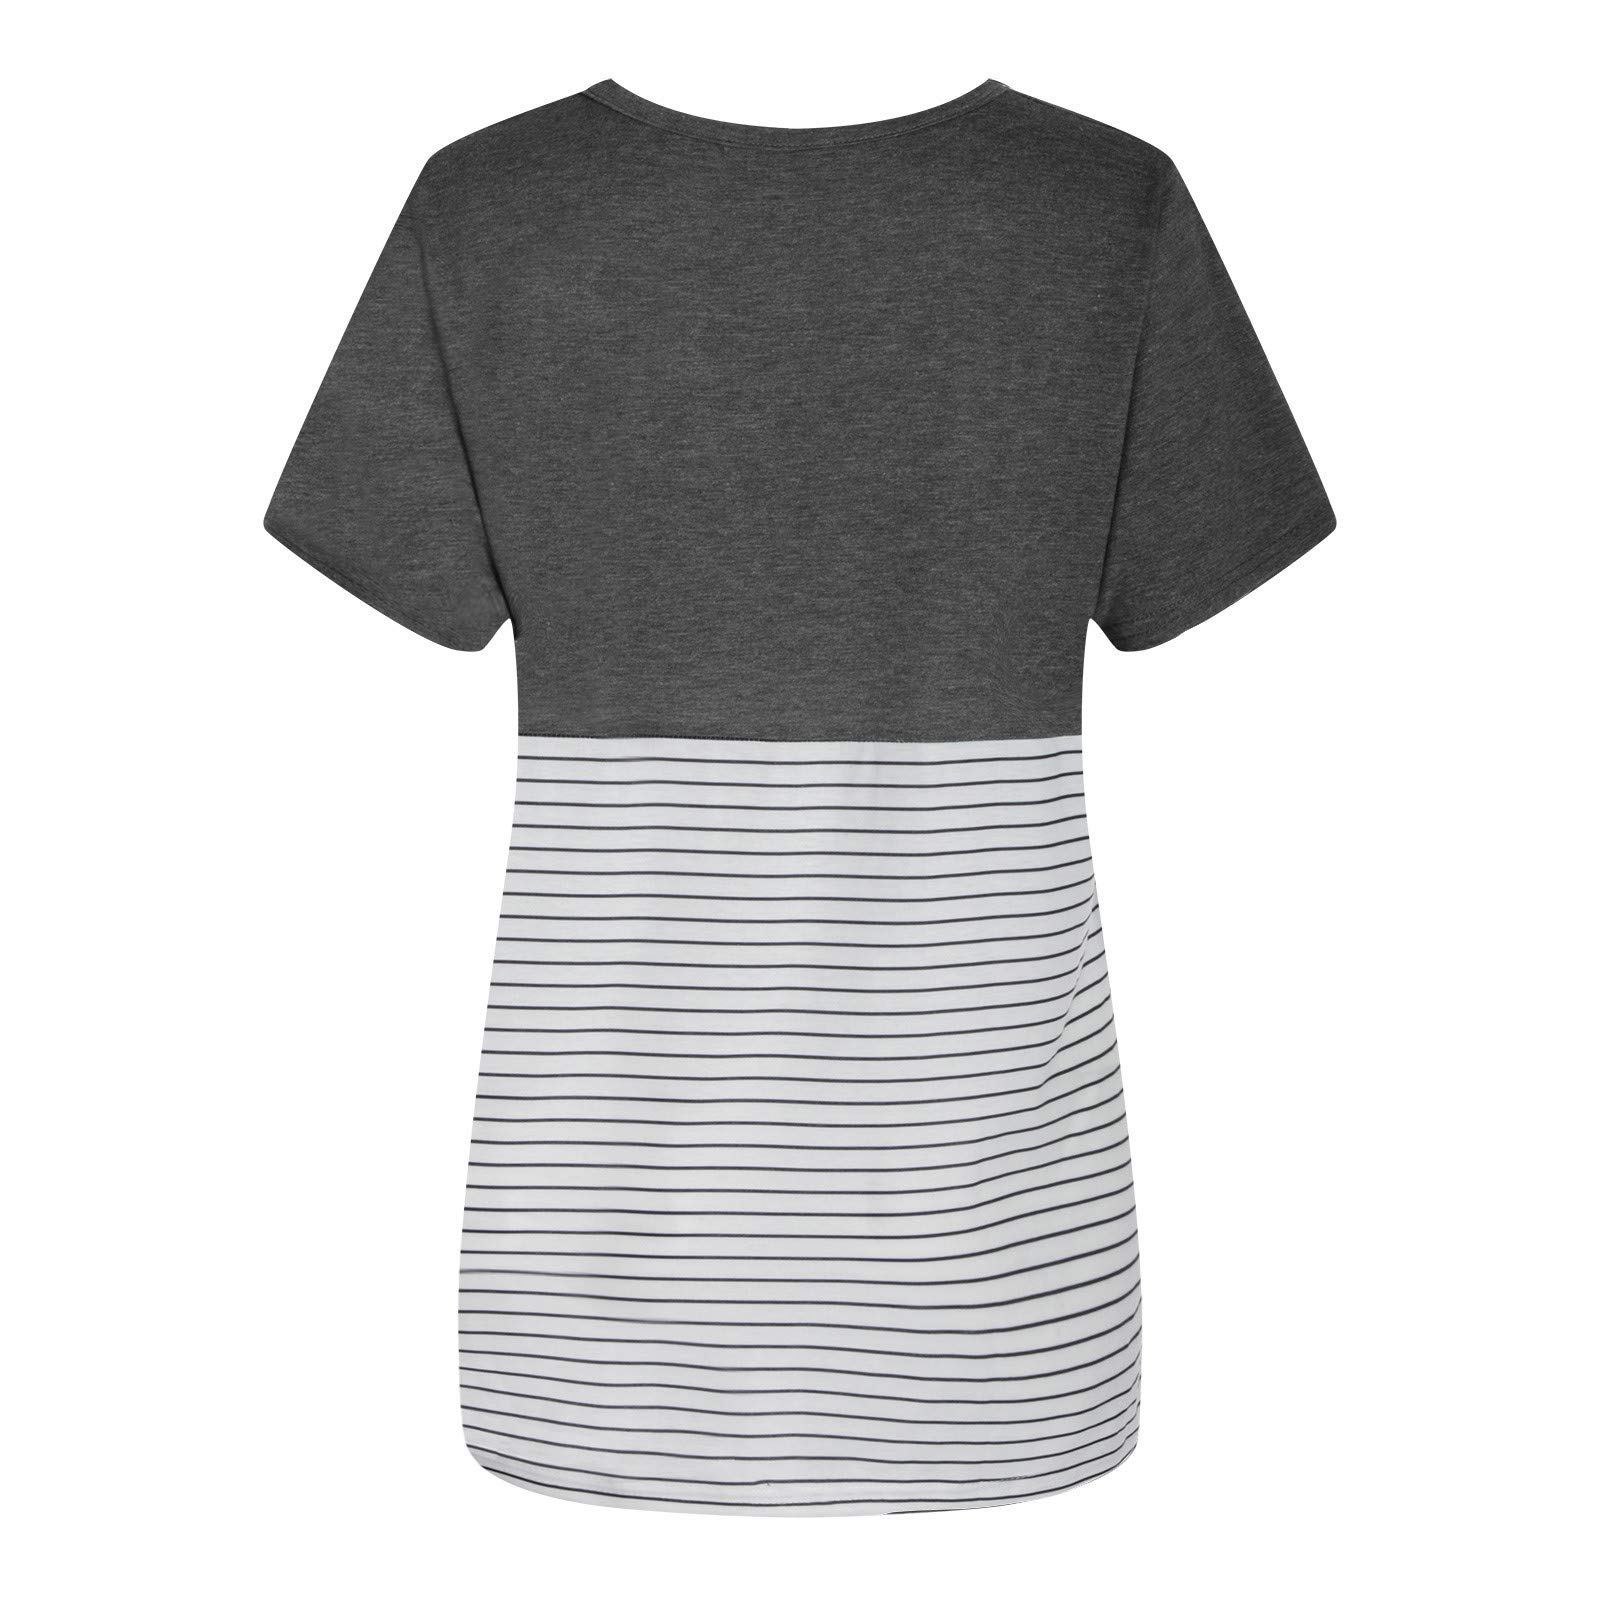 Bravetoshop Women Basic Tees Shirts Short Sleeve V Neck Classic Striped T Shirts Casual Summer Plus Size Blouse (Gray,XXL)